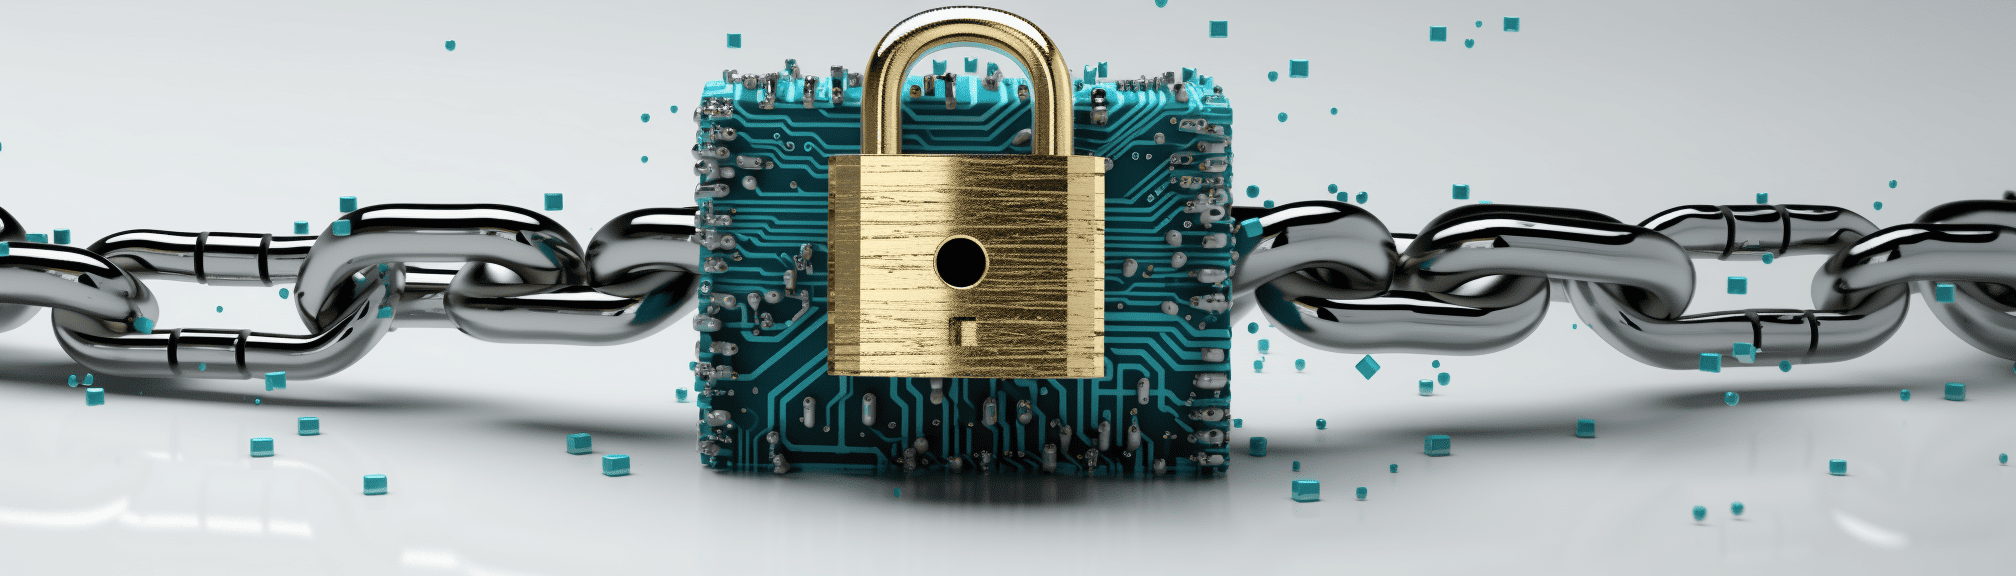 Zero Trust Security Model | Cybersecurity Tranformation